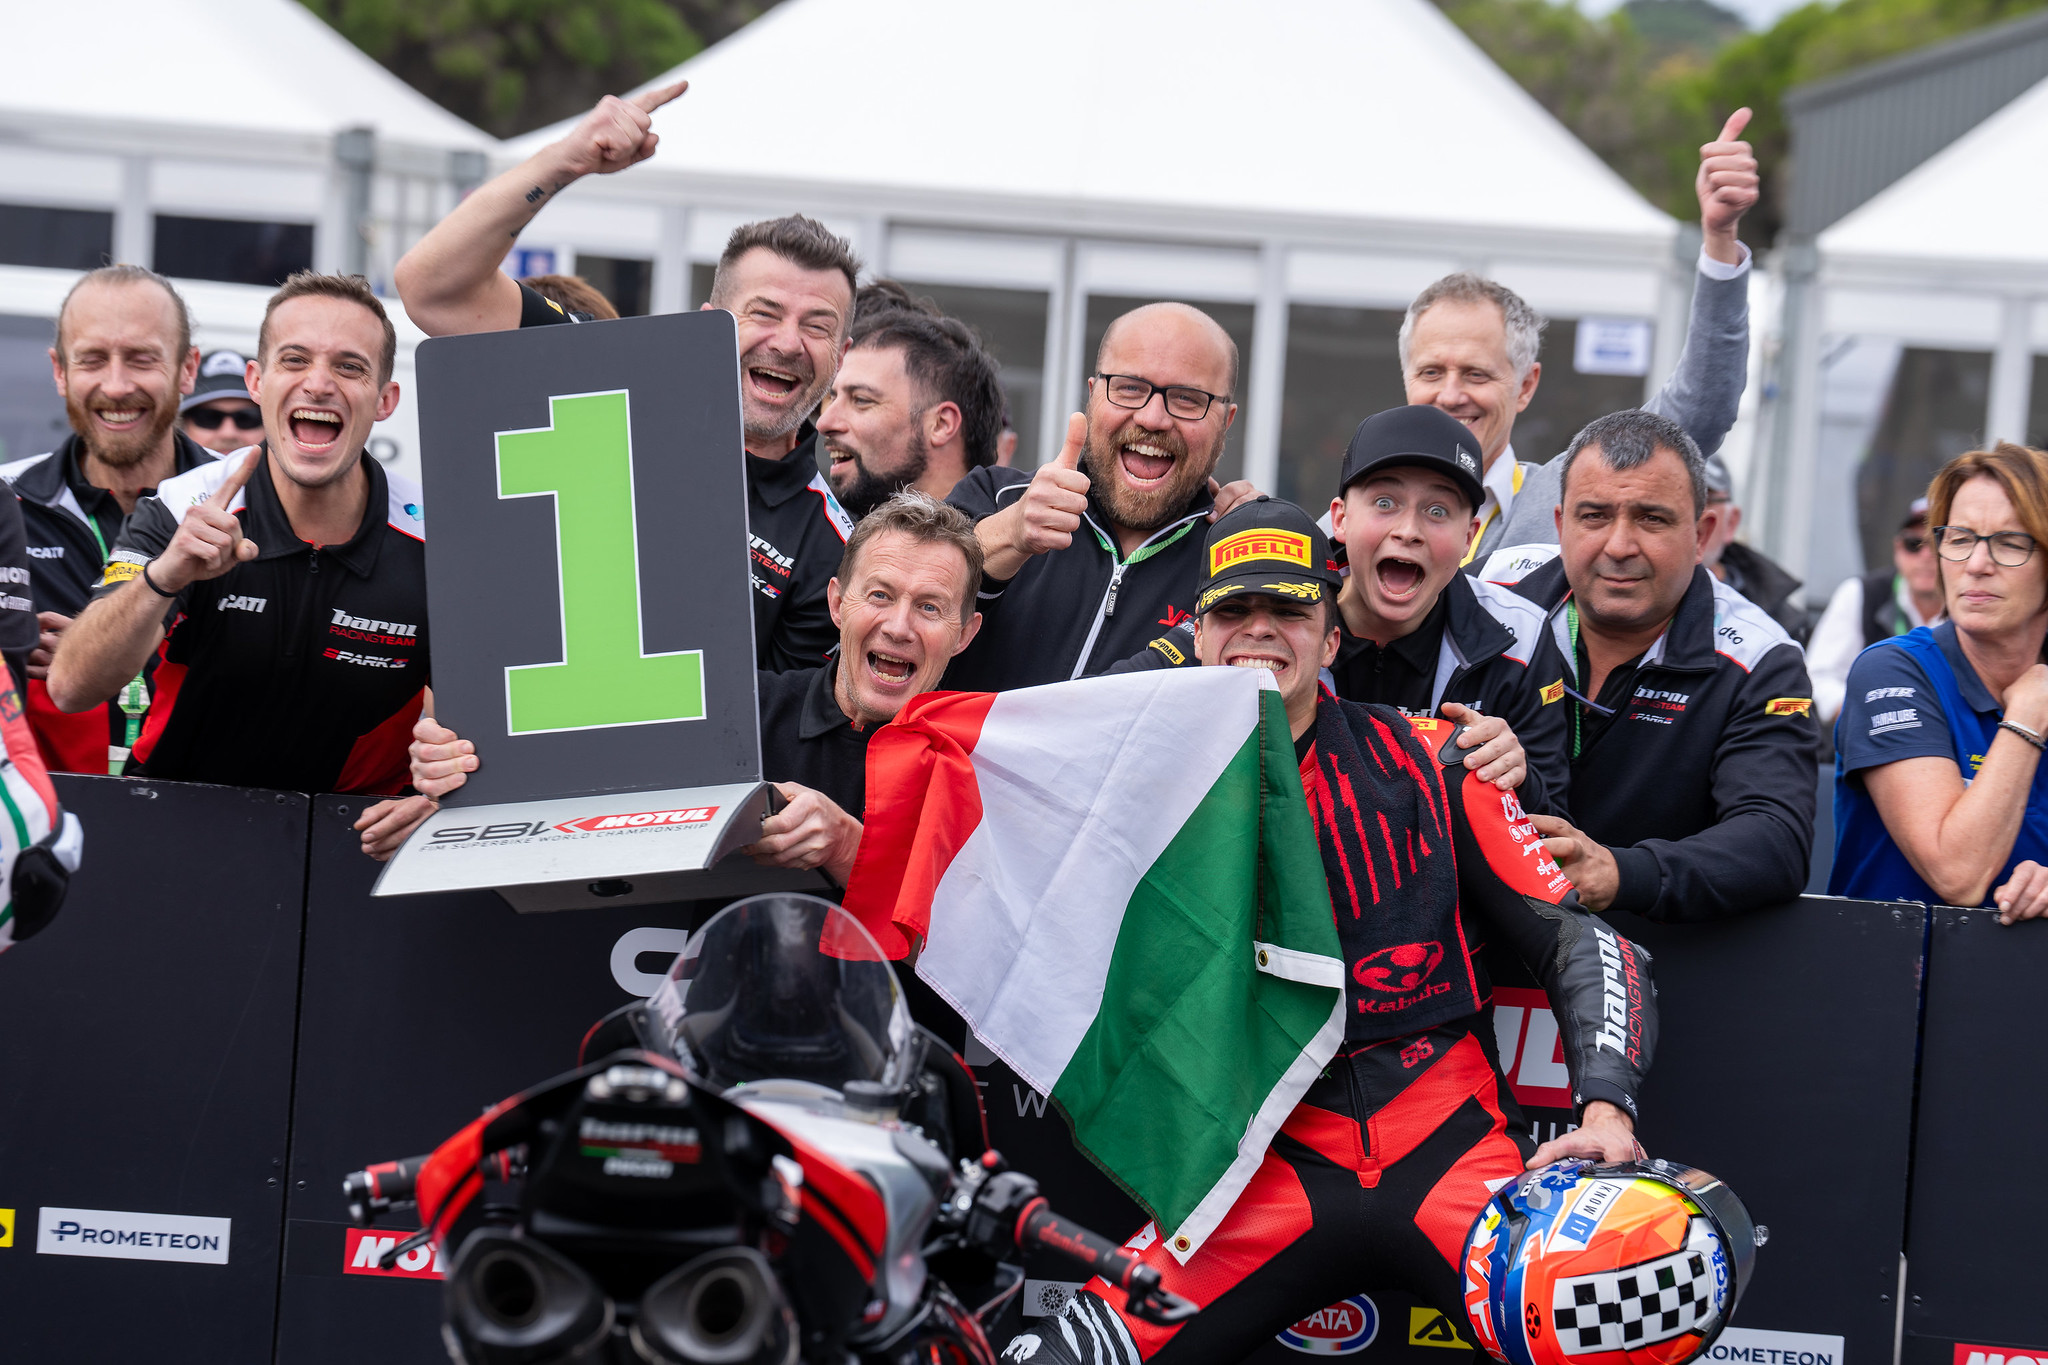 #55 Yari Montella - ITA - BARNI Spark Racing Team - Ducati Panigale V2